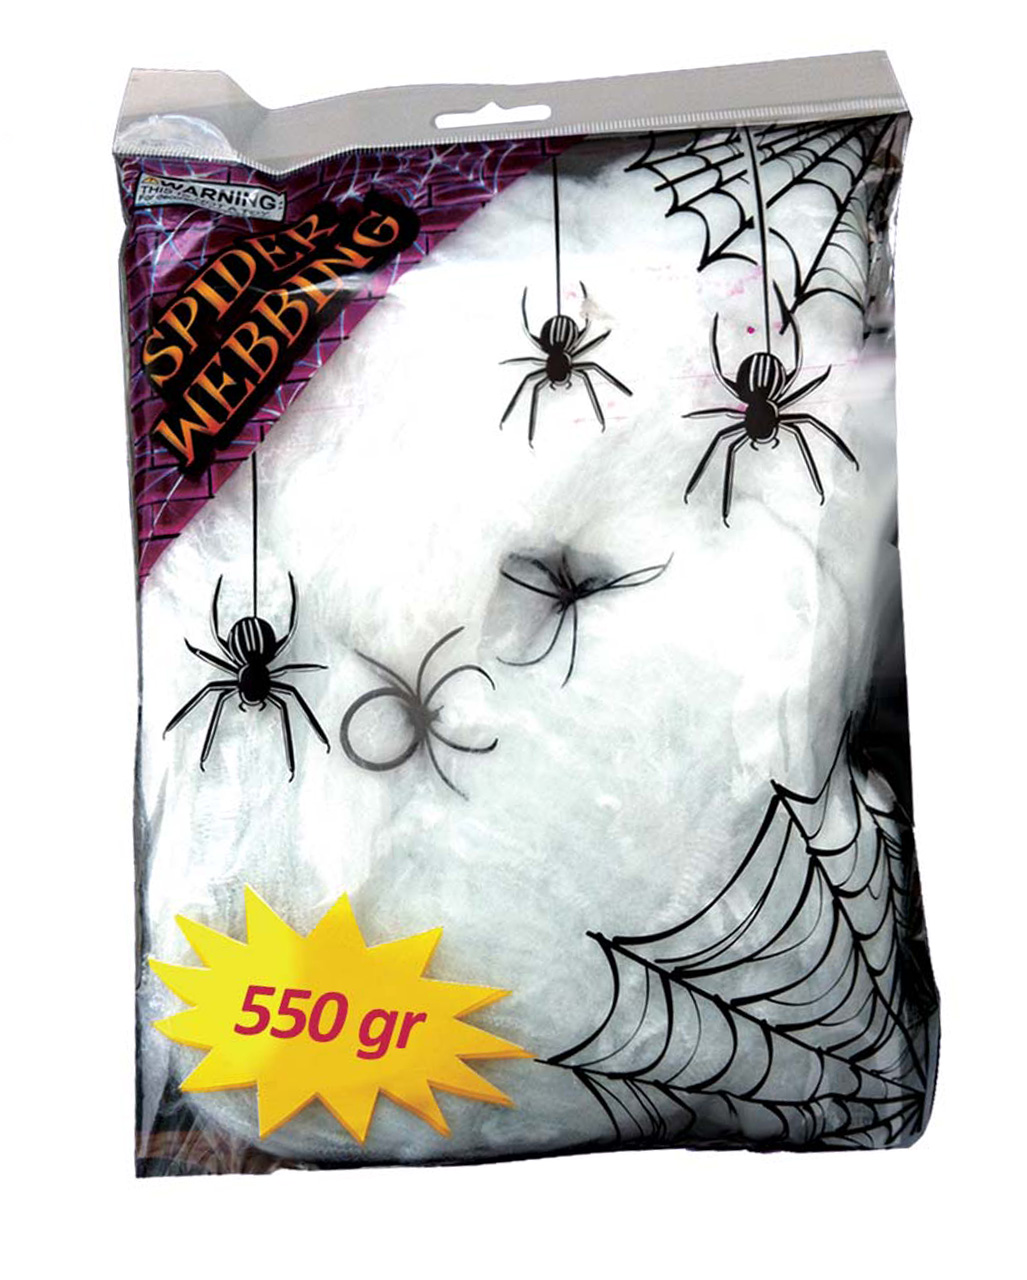 6 Stück Spinnennetze Spinnenweben Spinnennetz Plastikspinnen Helloween 